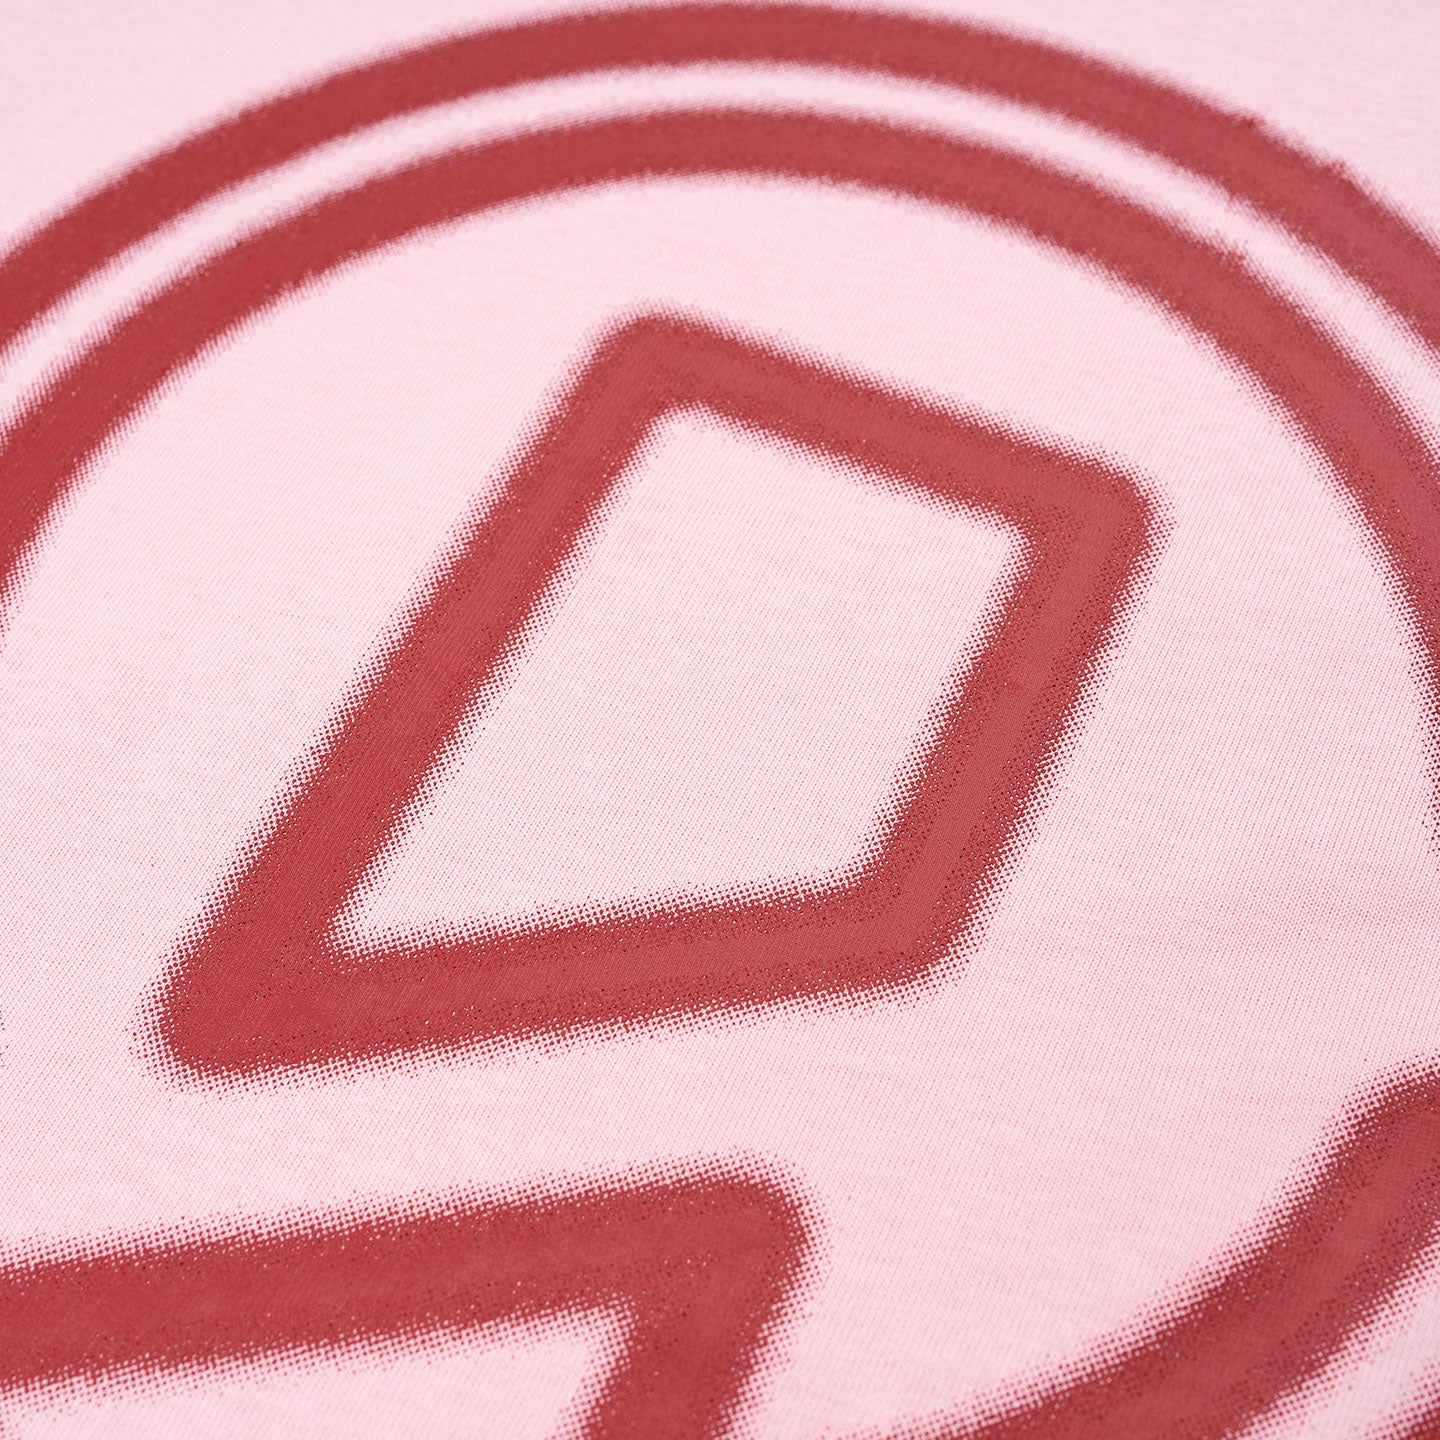 Fuzzy Logo Broad Tee - Beige Pink